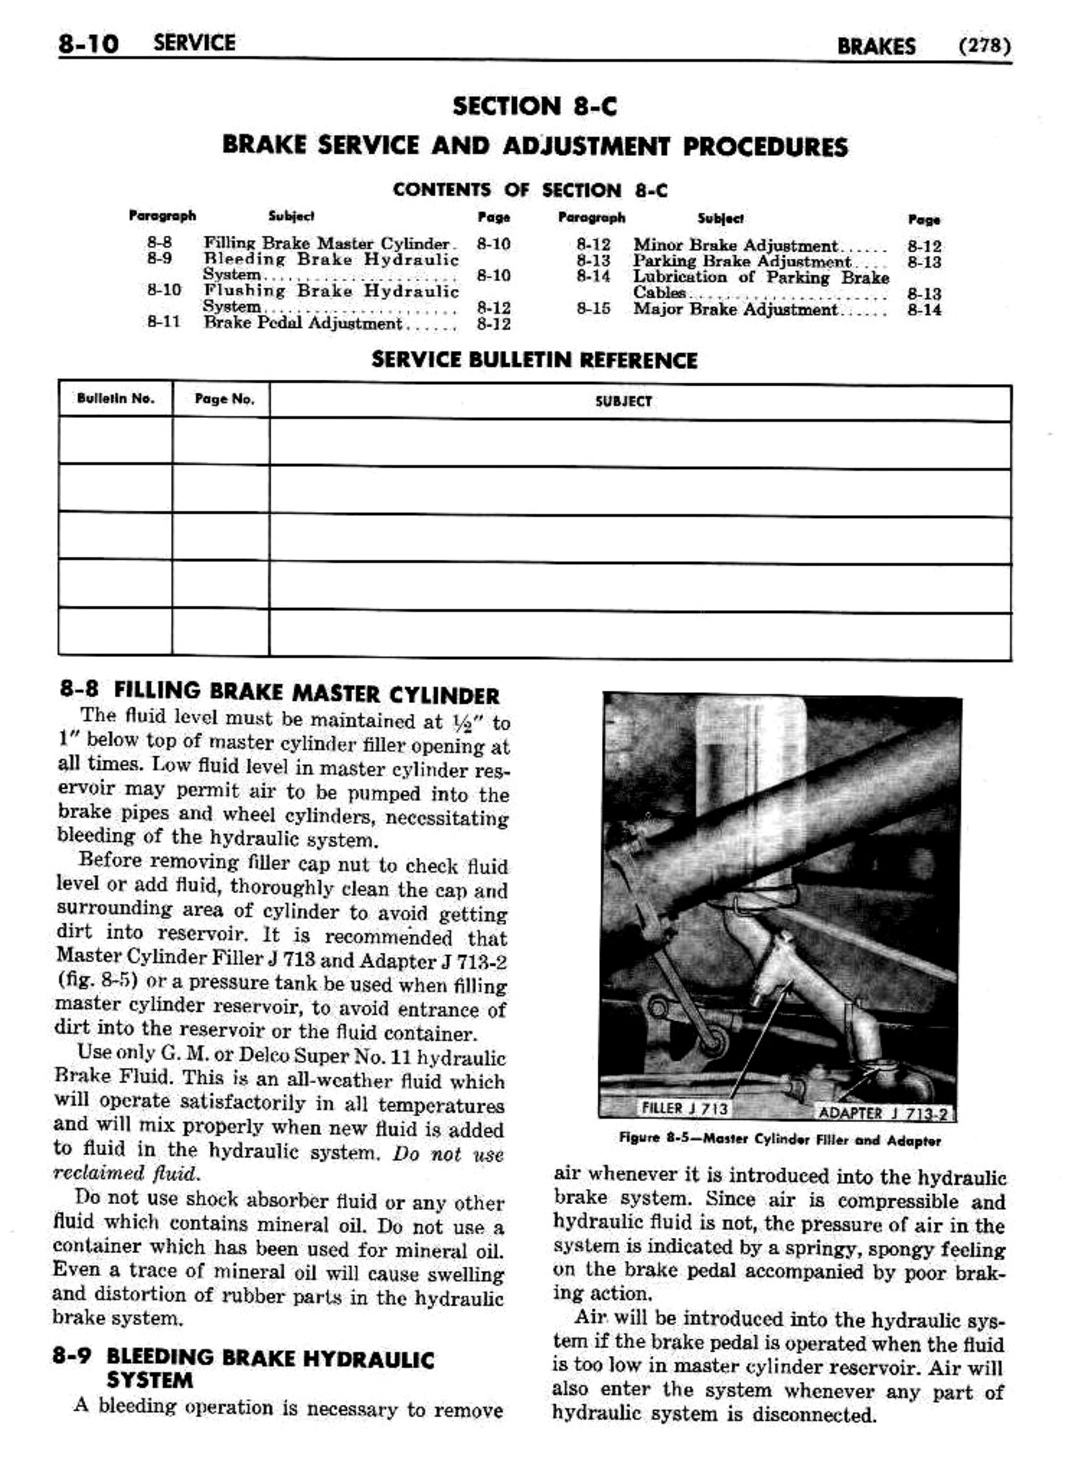 n_09 1951 Buick Shop Manual - Brakes-010-010.jpg